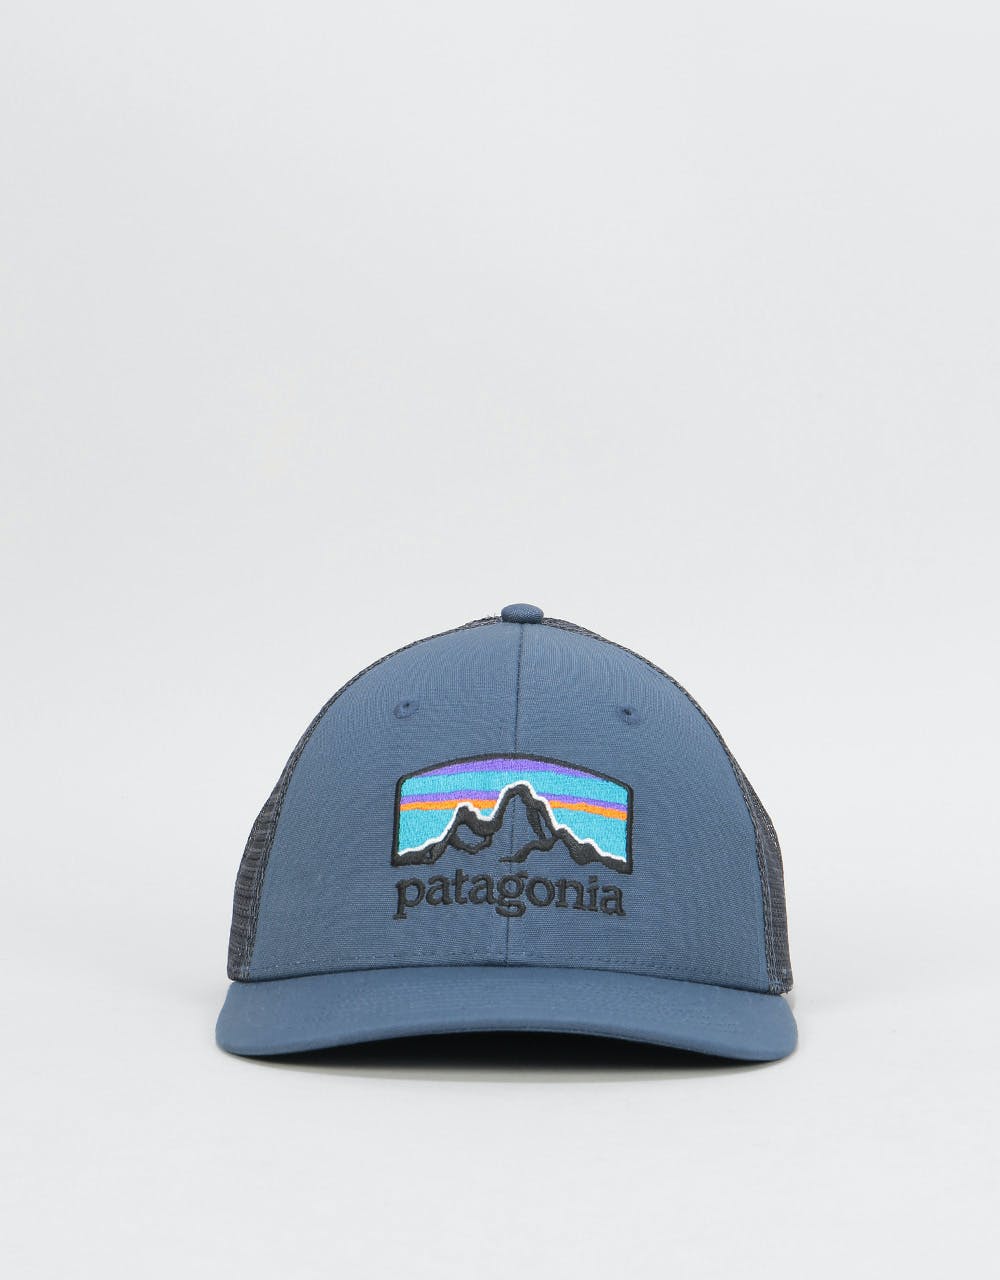 Patagonia Fitz Roy Horizons Trucker Cap - Dolomite Blue